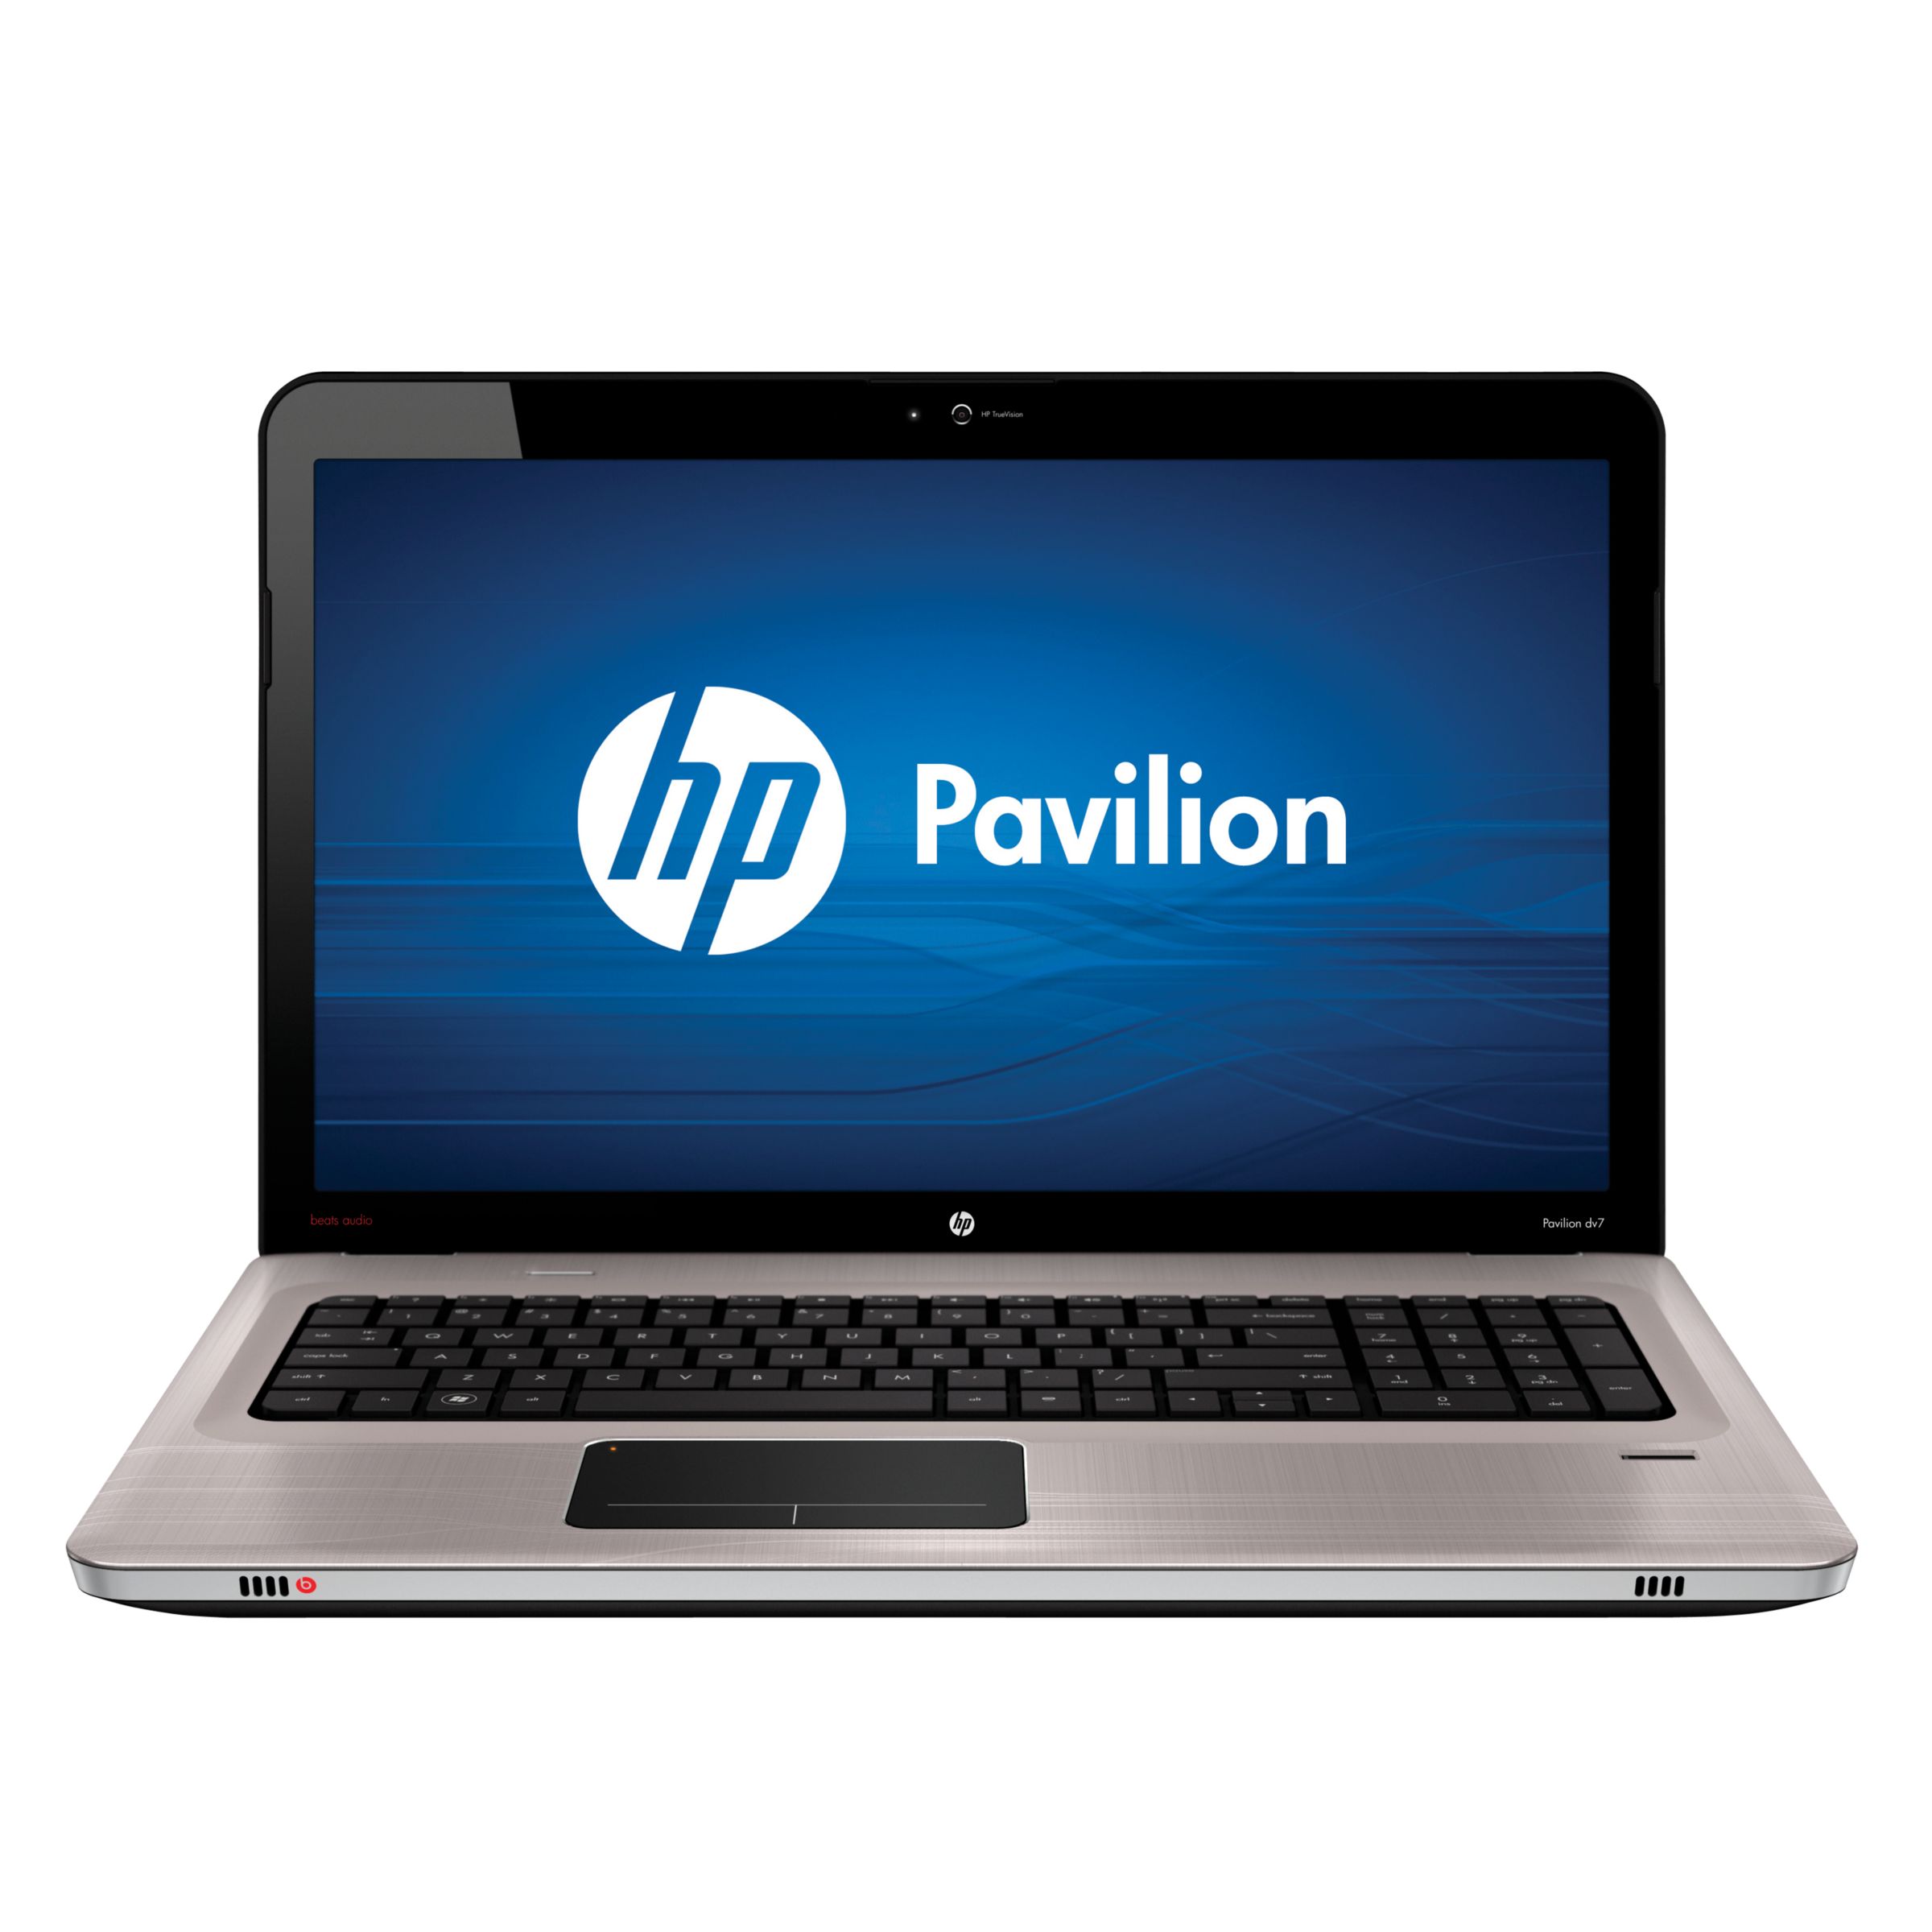 HP Pavilion DV7-4140EA Laptop, AMD Phenom, 500GB, 3.6GHz, 4GB RAM with 17.3 Inch Display at John Lewis